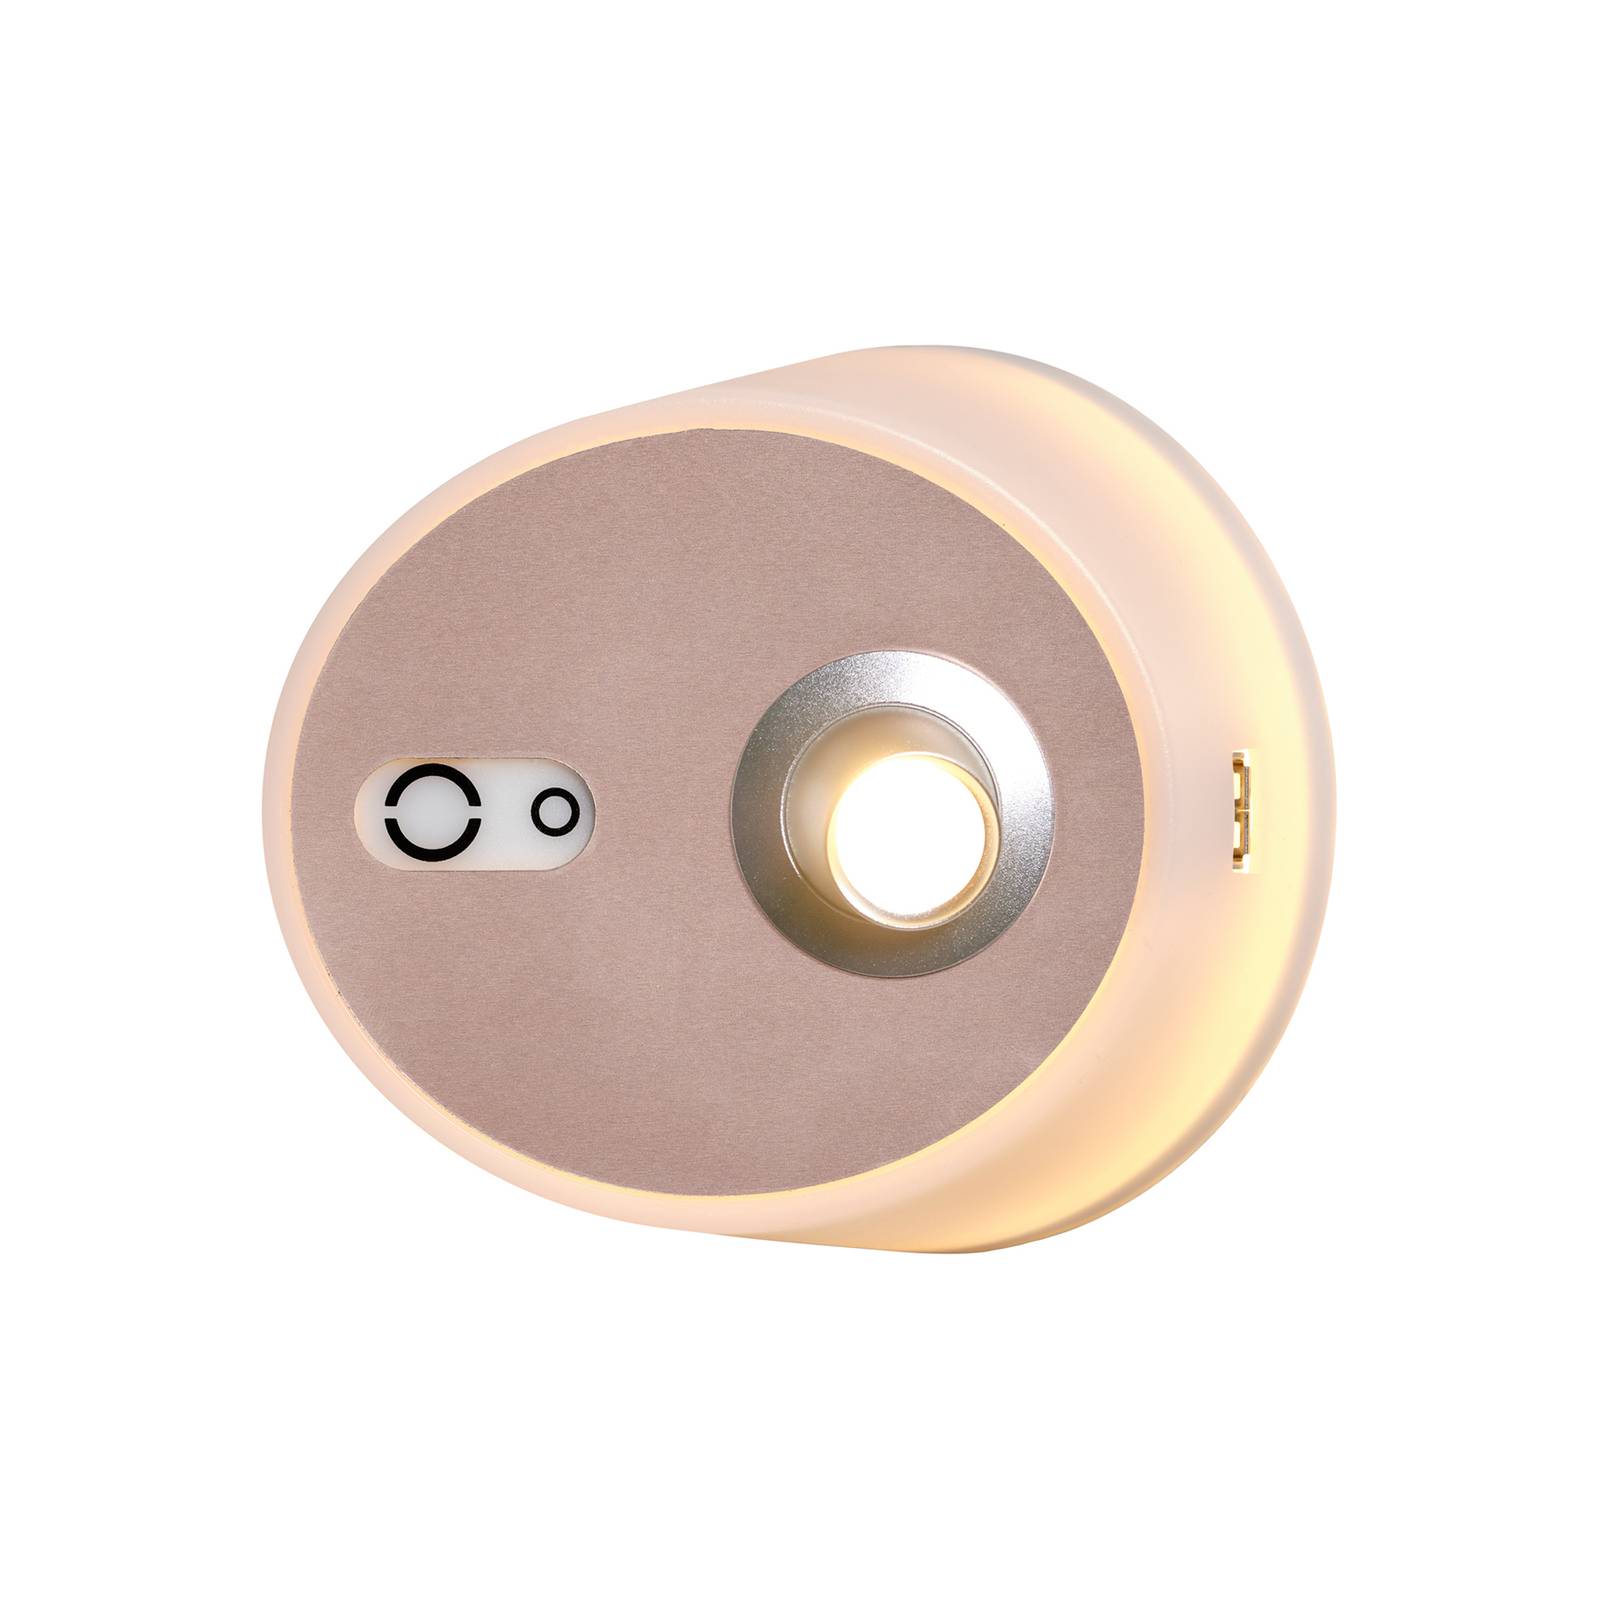 Carpyen LED-Wandlampe Zoom, Spot, USB-Ausgang, pink-kupfer